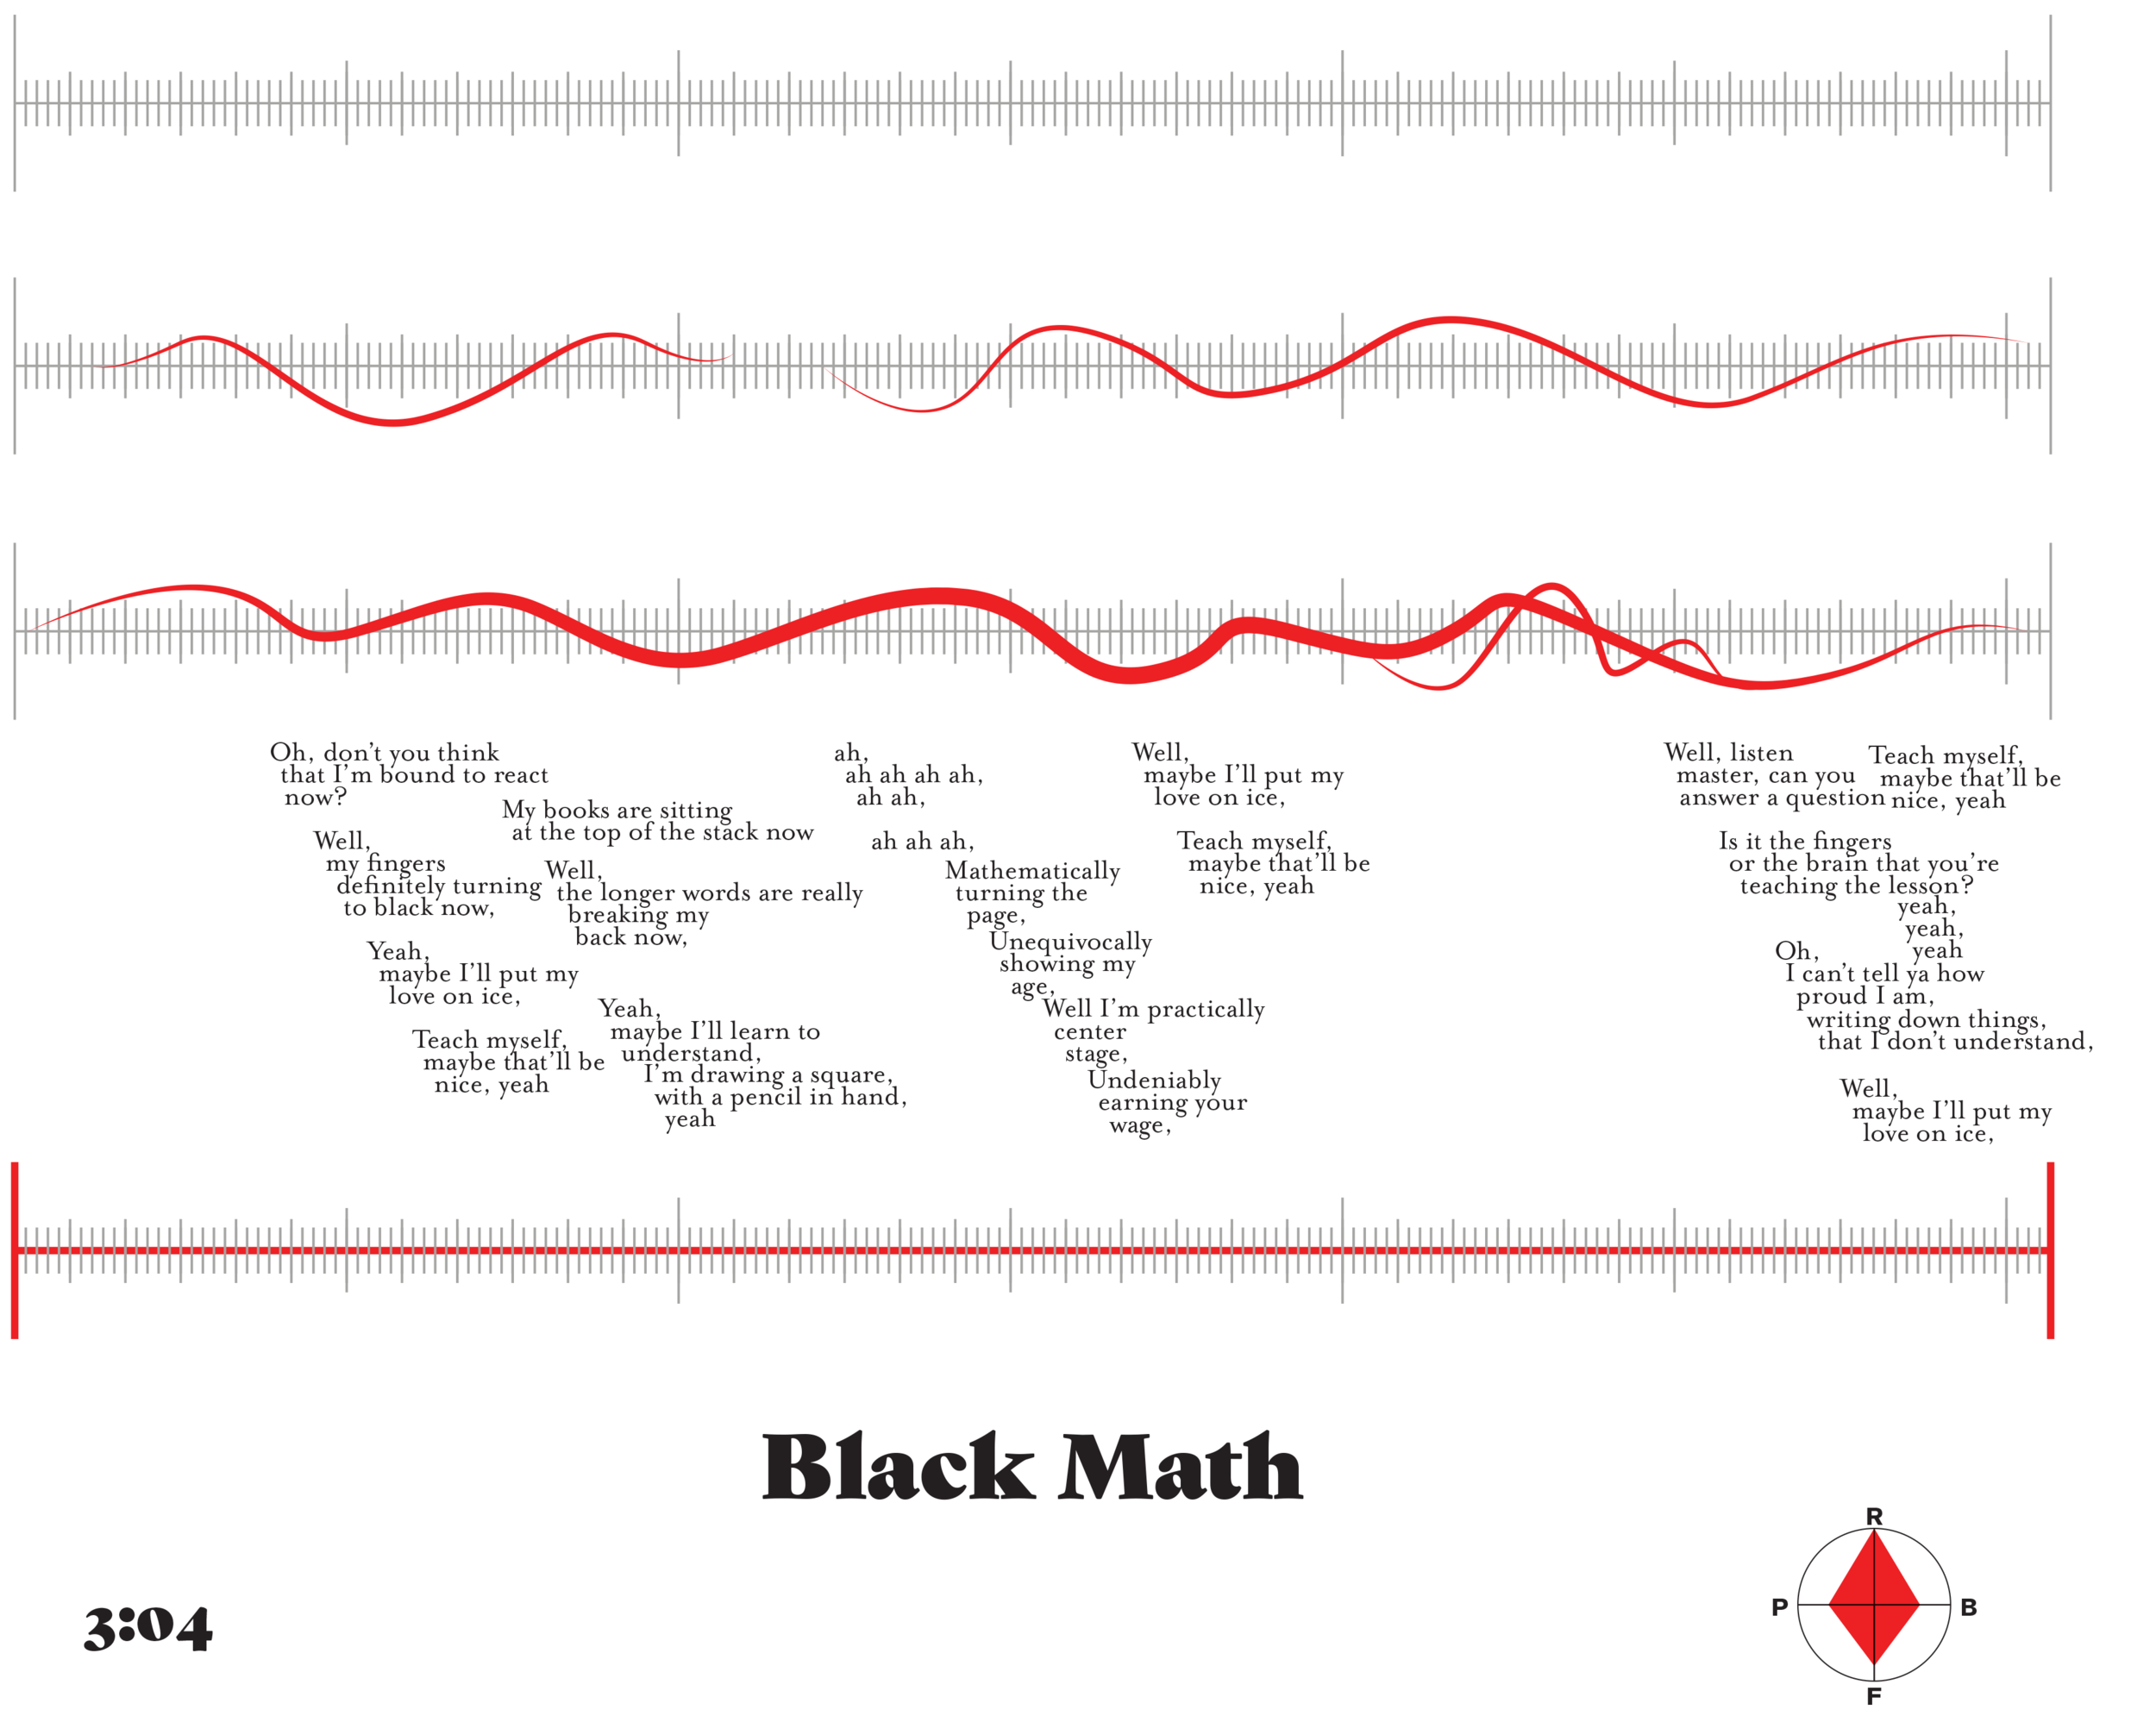 02 - Black Math.png